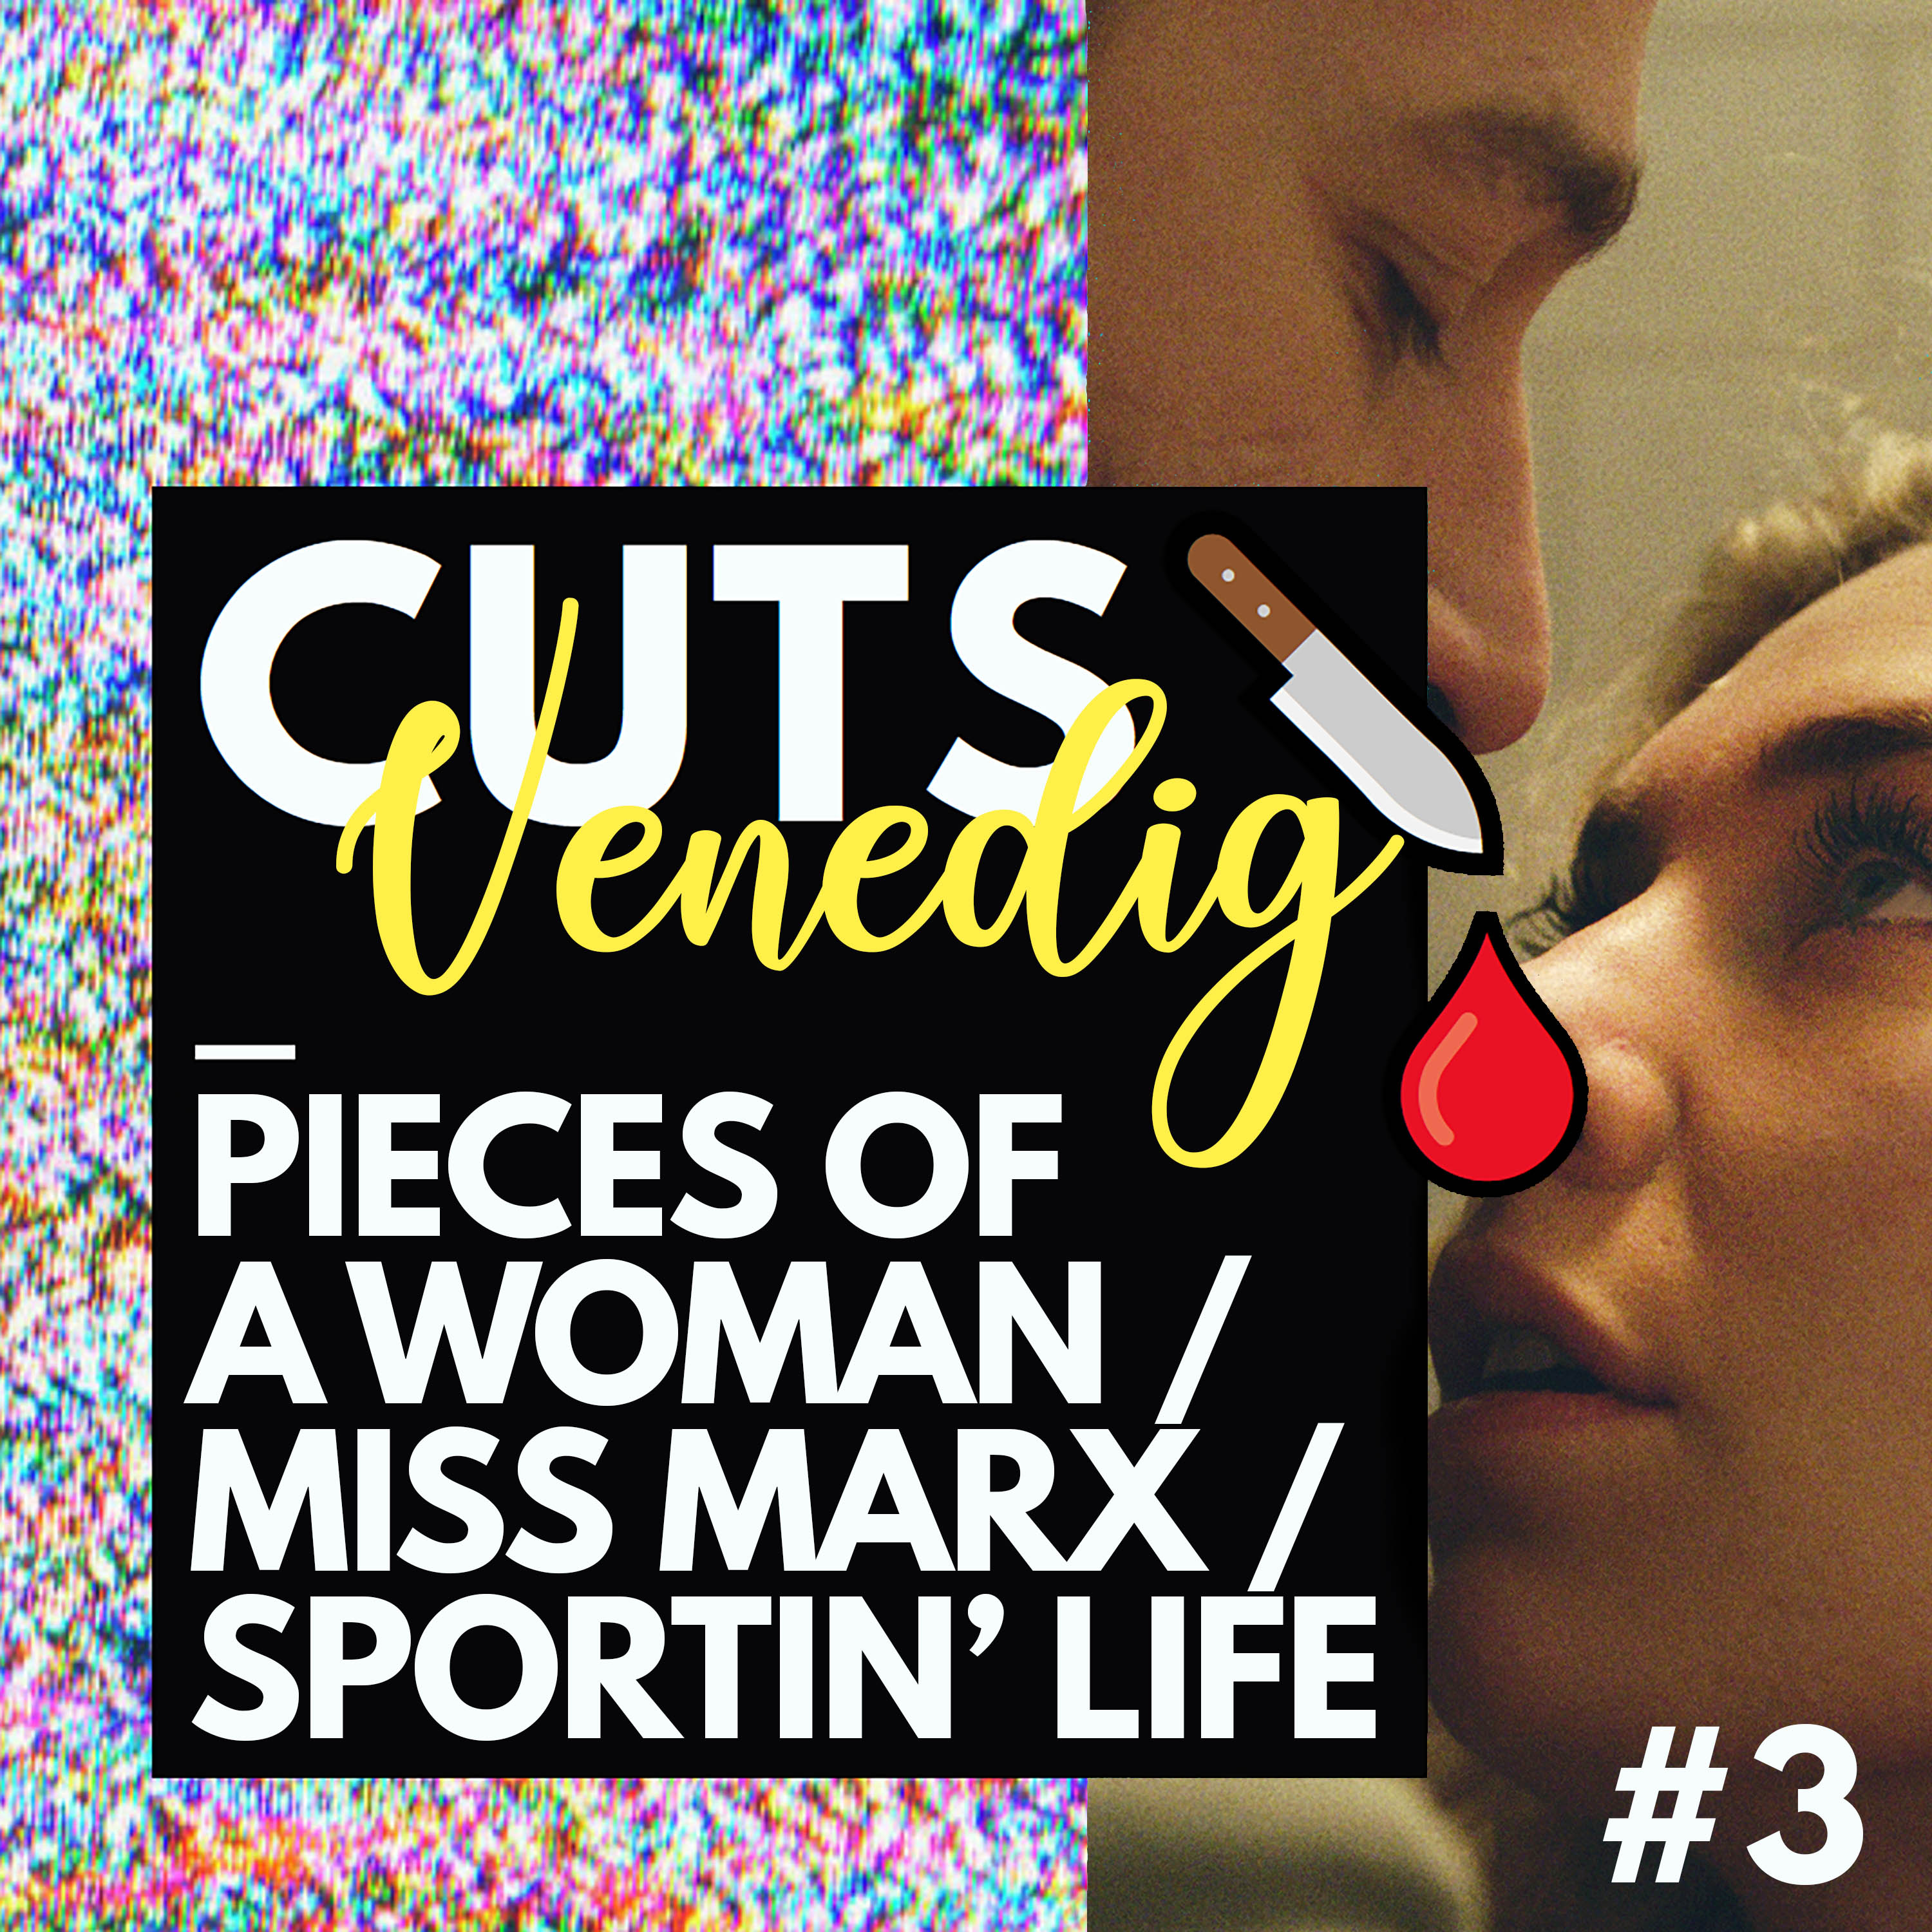 Venedig #3 - Pieces of a Woman, Miss Marx, Sportin' Life